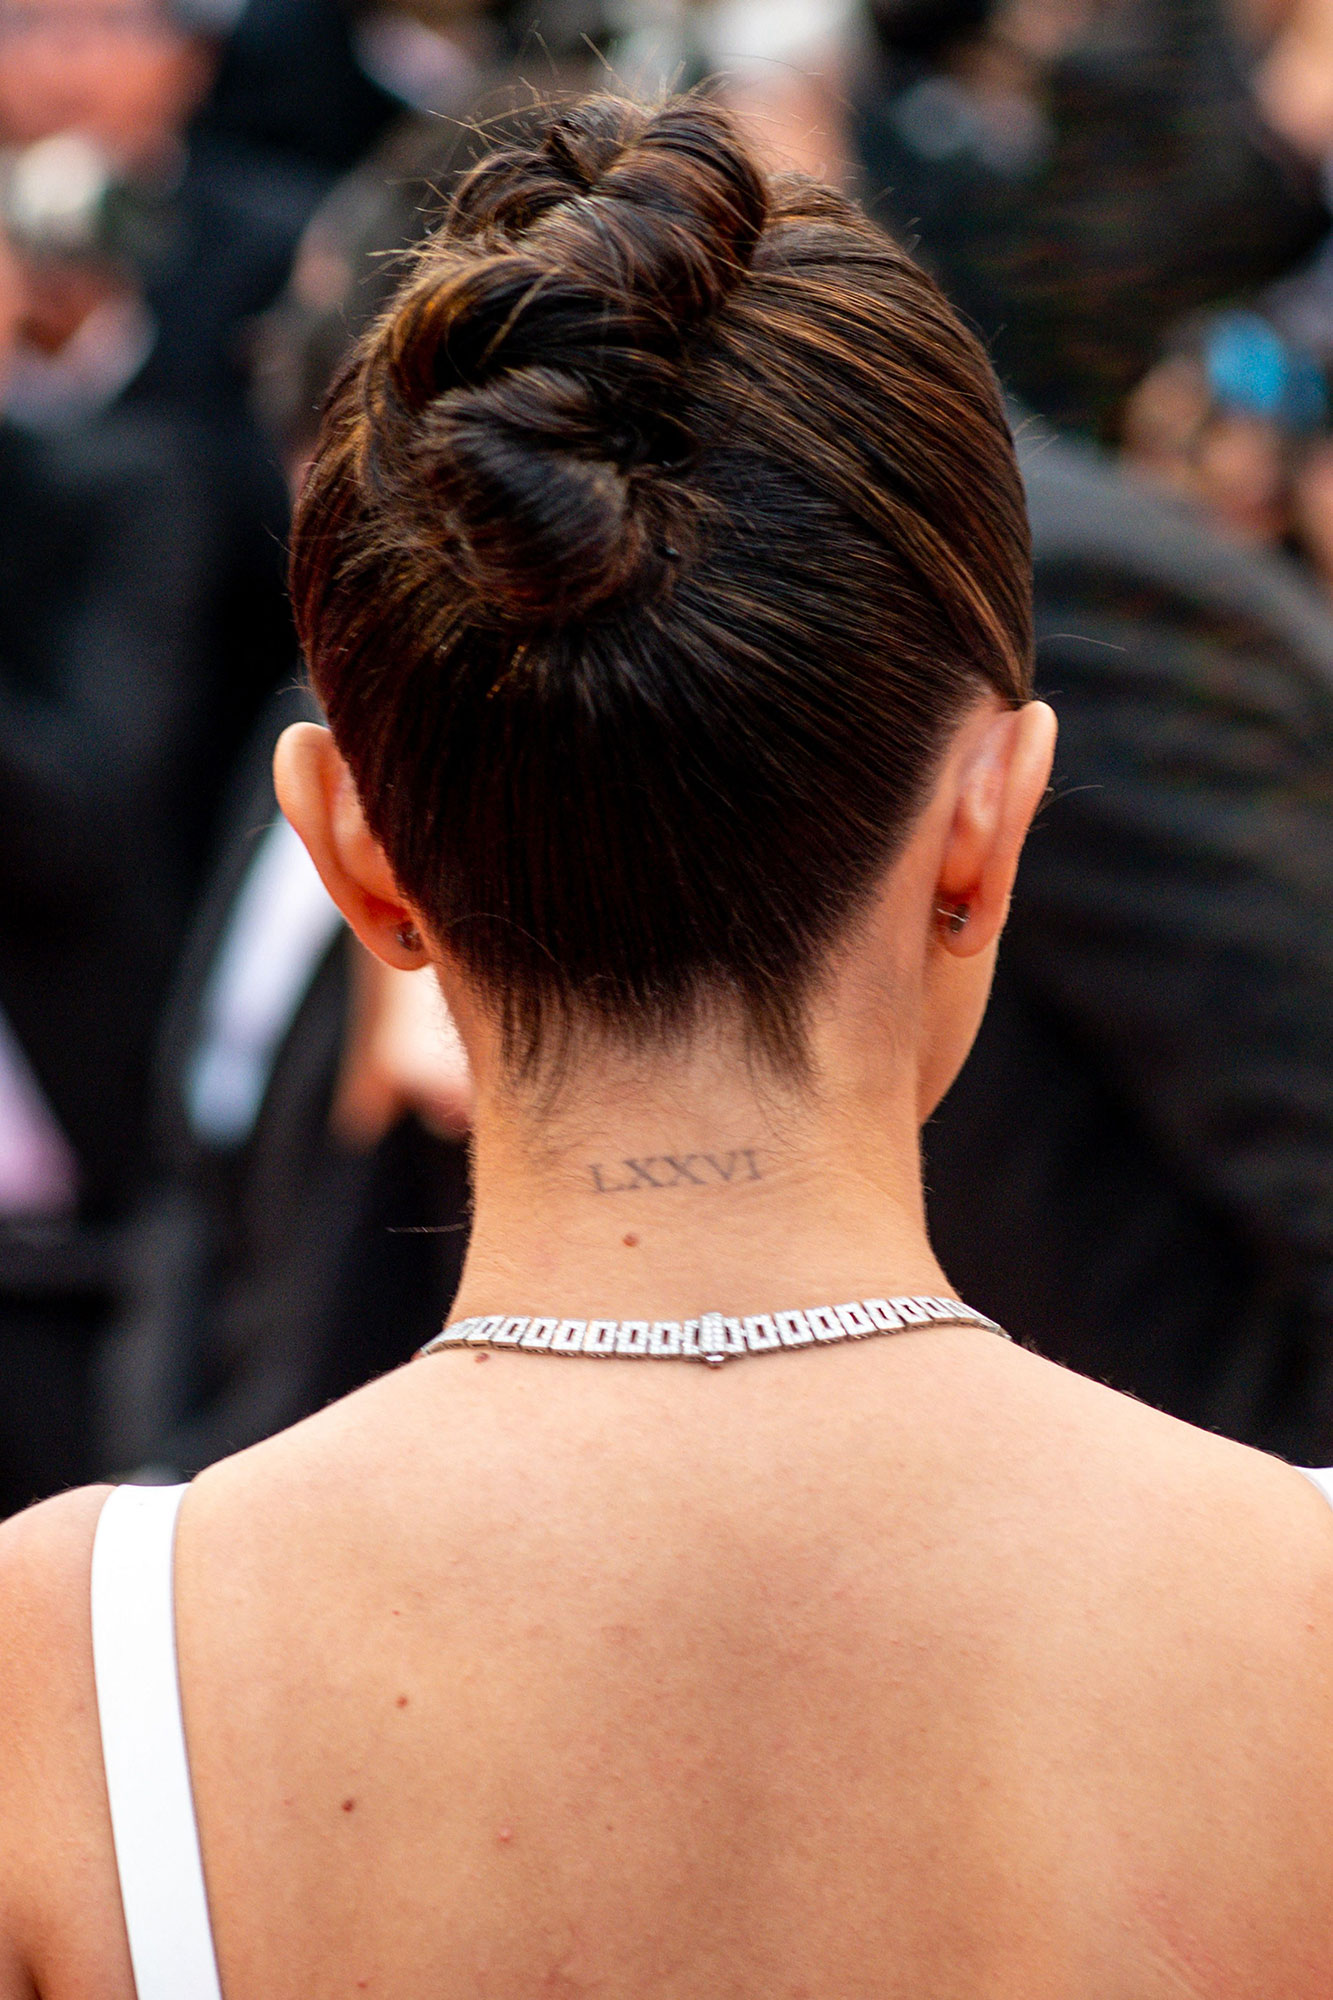 Selena Gomez Rare Neck Tattoo Meaning  Photos Are So Inspiring   StyleCaster